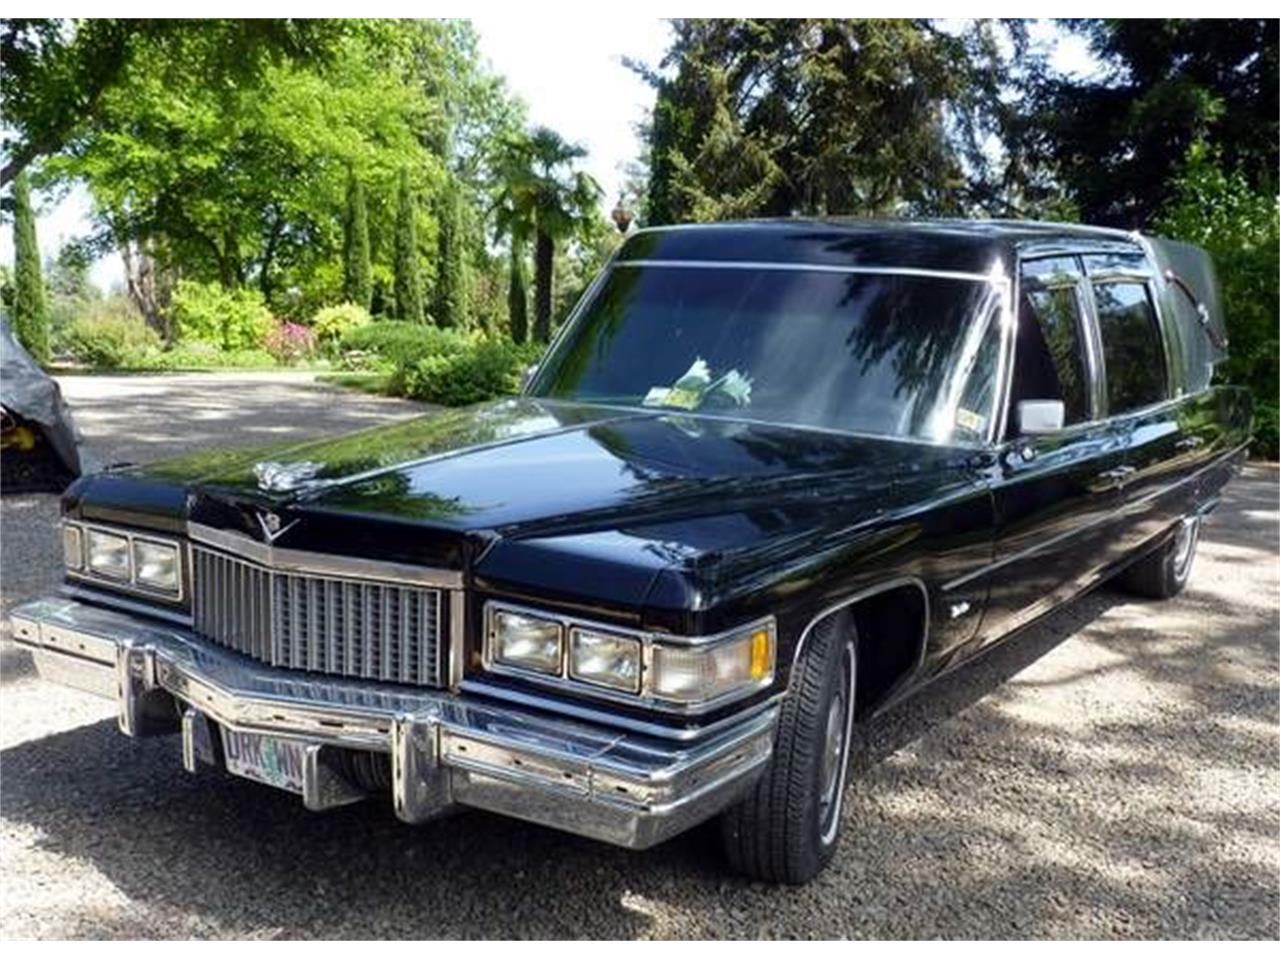 For Sale: 1975 Cadillac Hearse in Cadillac, Michigan.